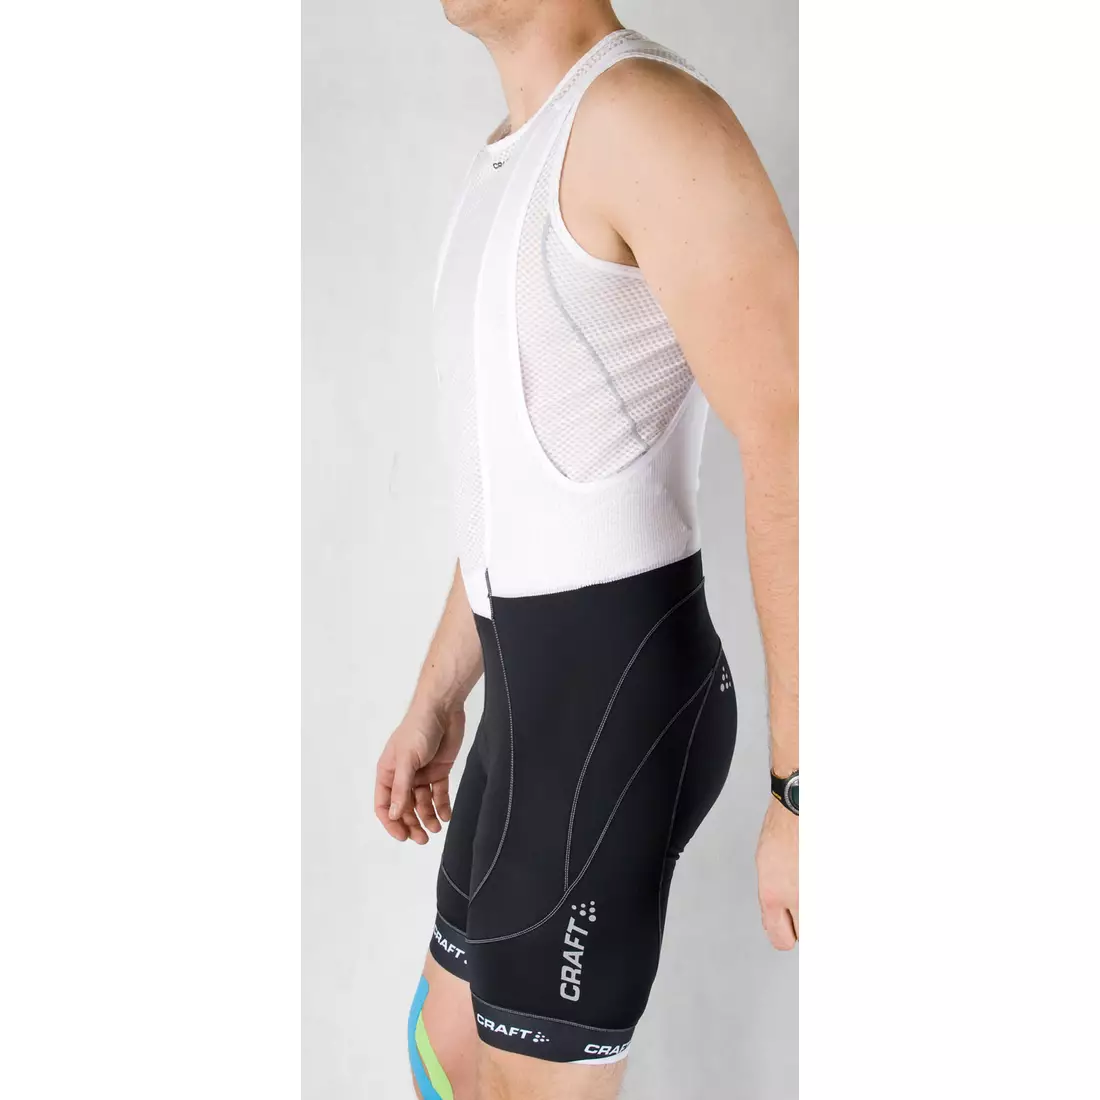 CRAFT Elite Bike Bib Short men's bib shorts 1900004-9900